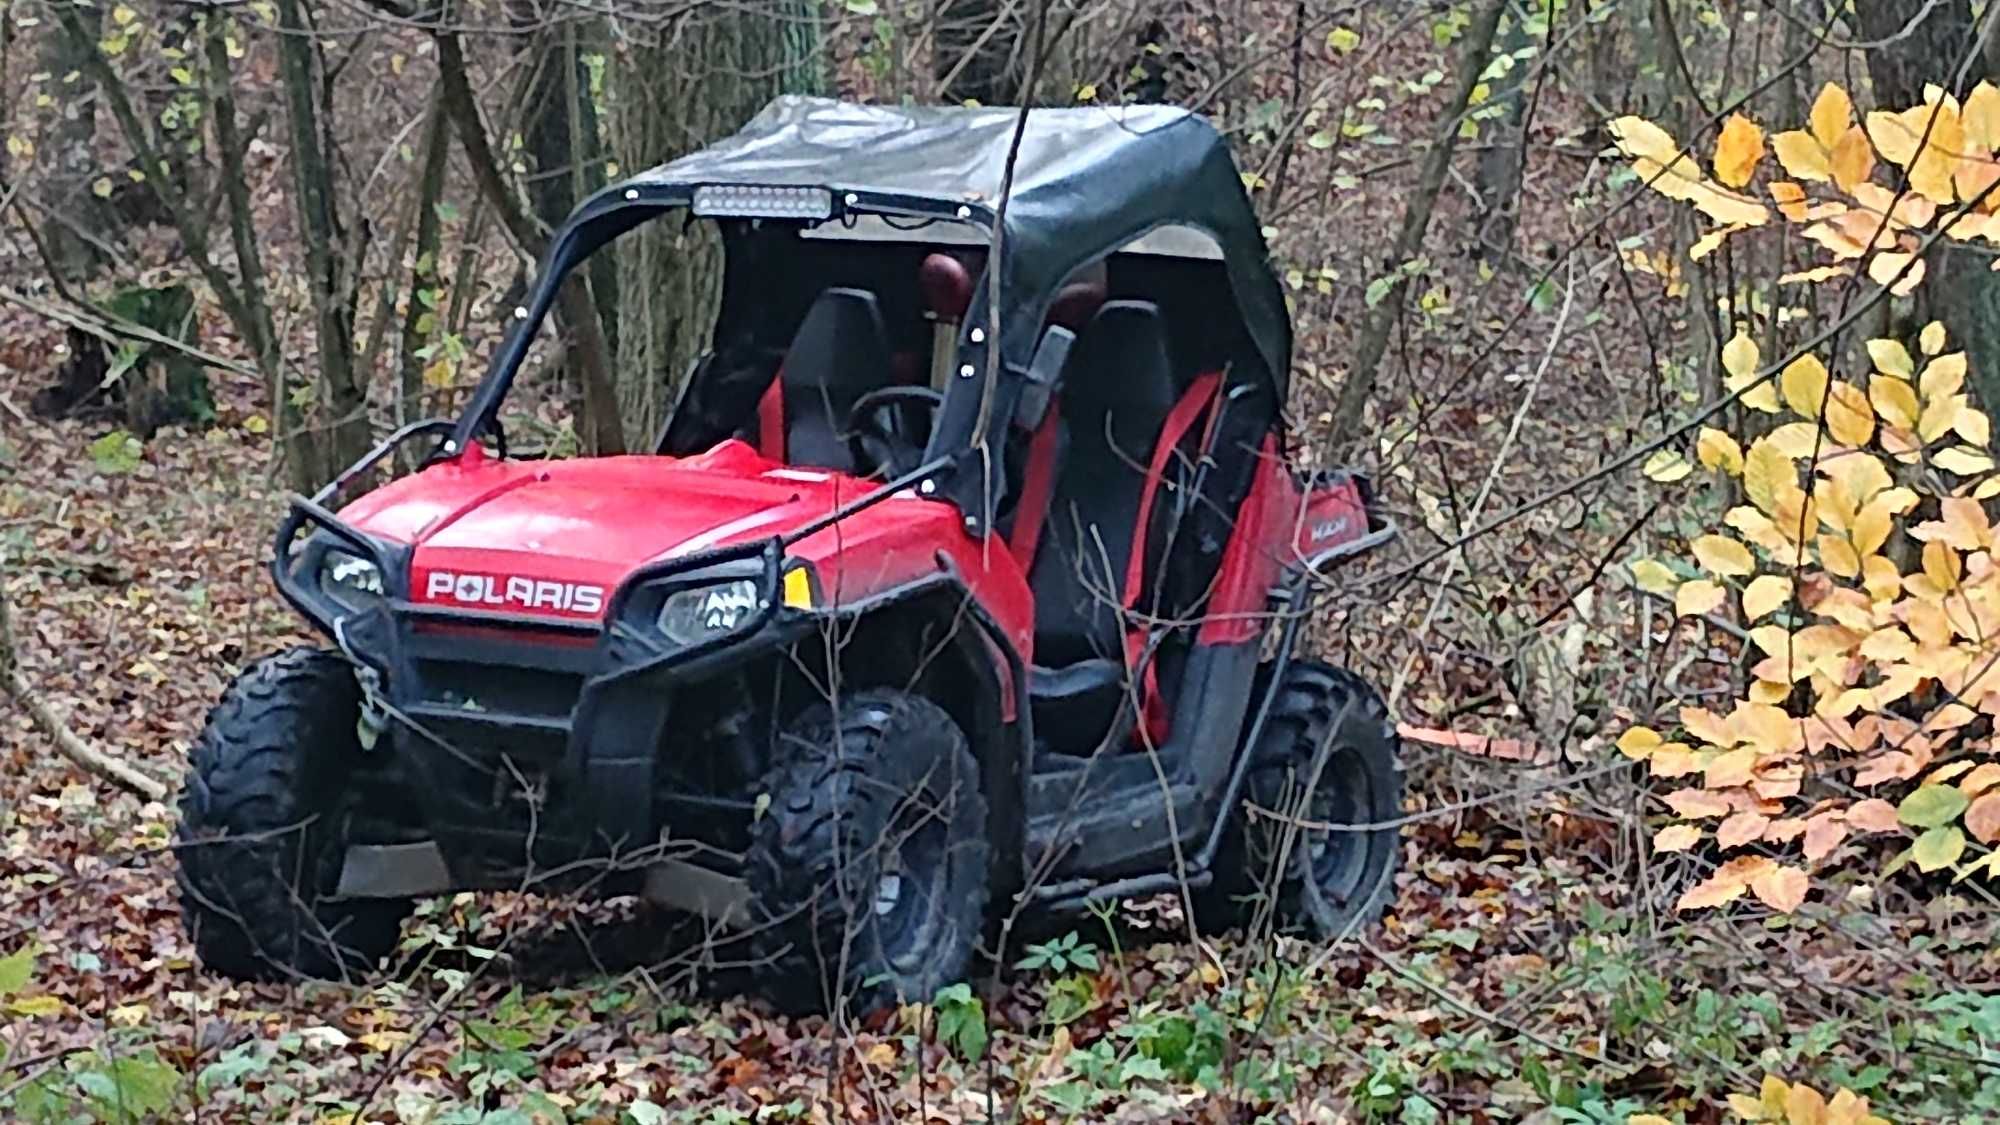 Polaris RZR 800 EFI Buggy ATV Warn Sprawny Pług